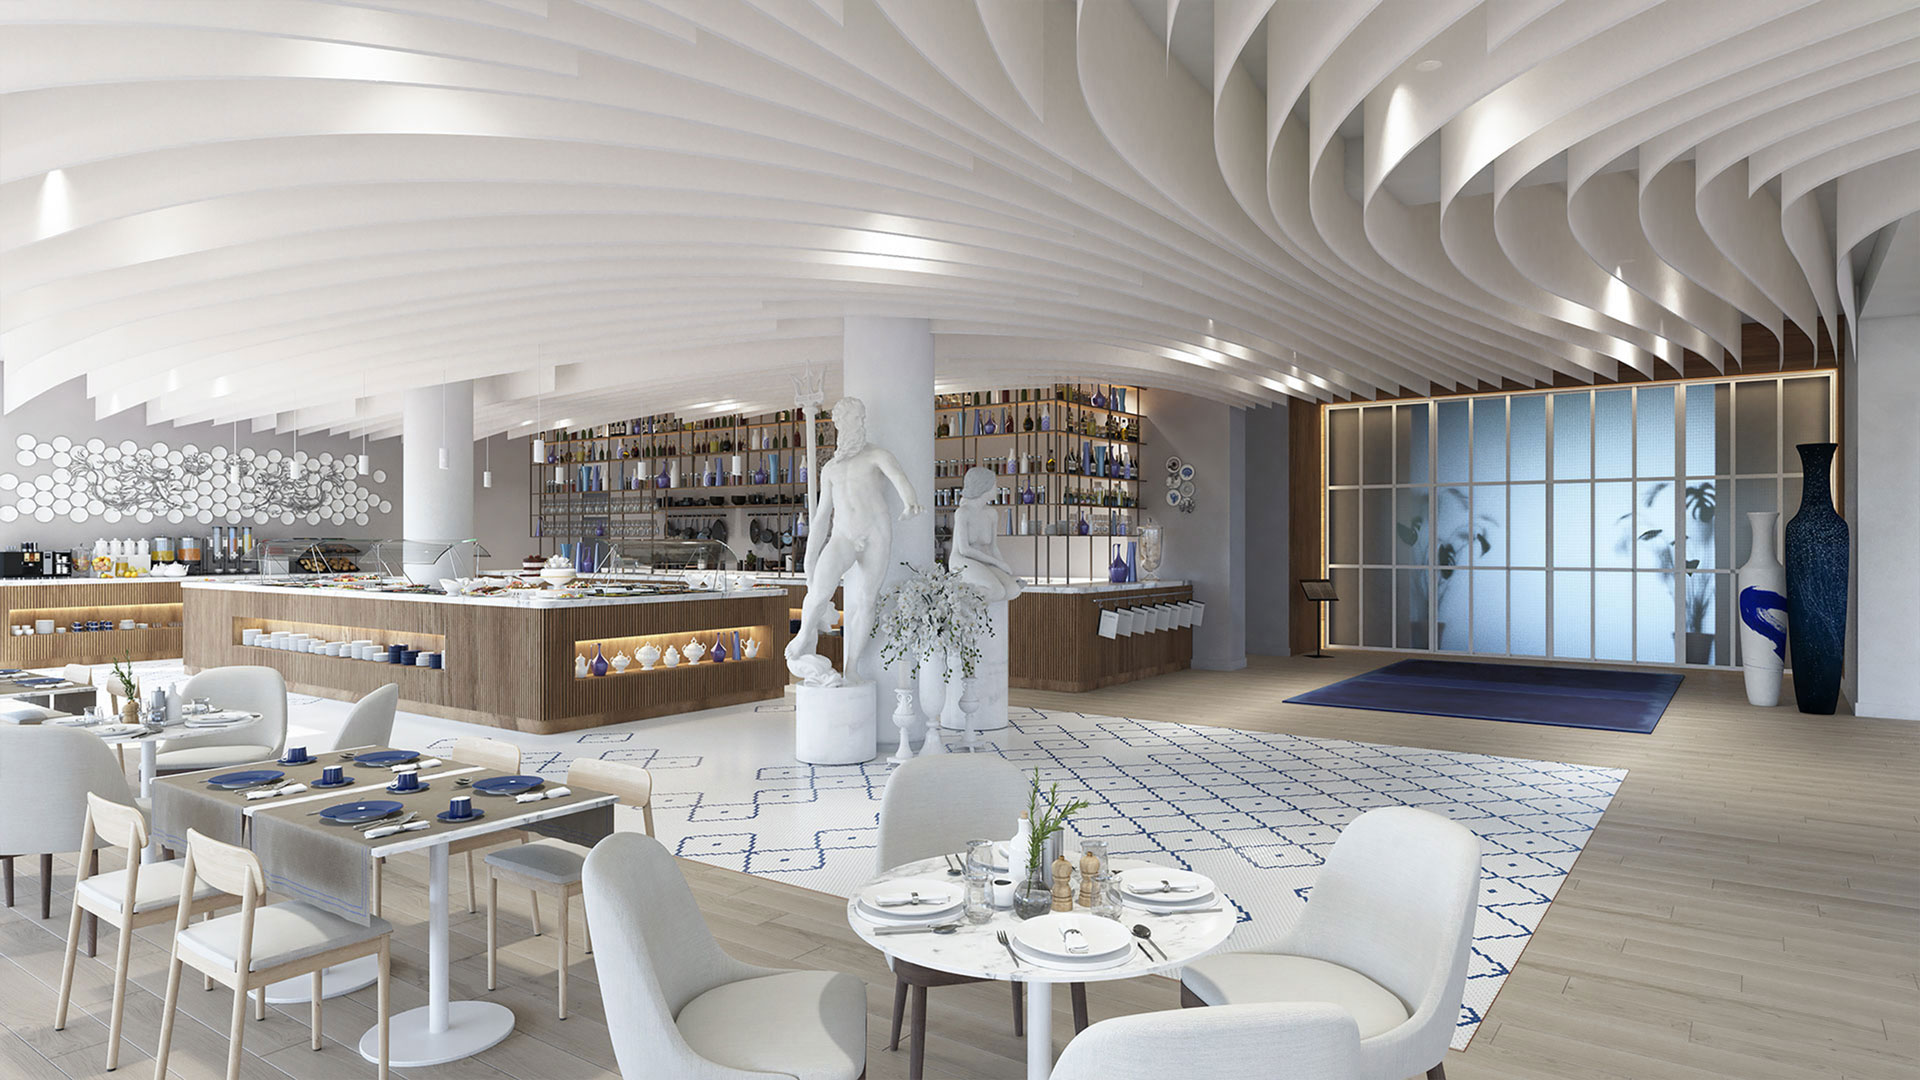 arhitektonska-vizualizacija-usluga-3d-modeling-rendering-hotel-restaurant-r1x